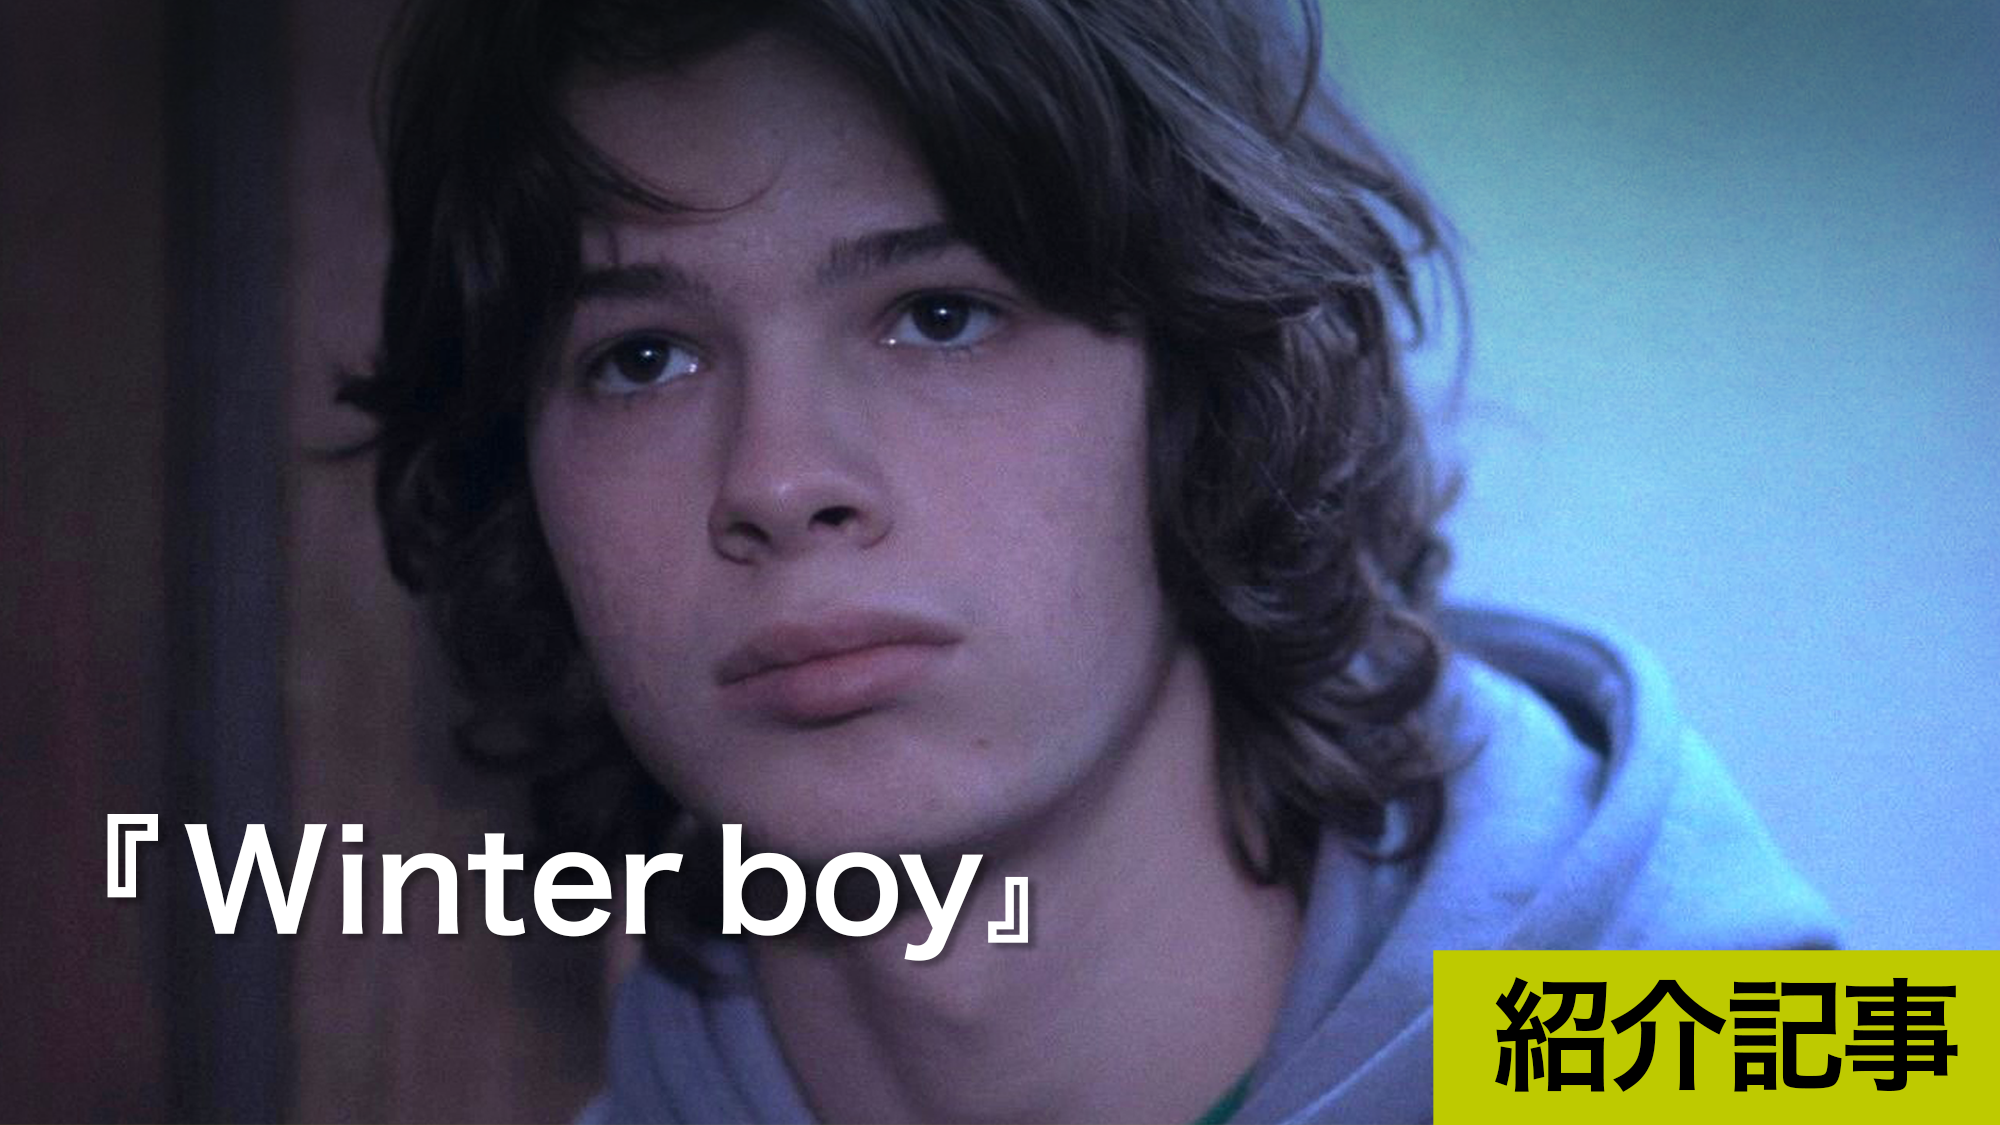 『Winter boy』主役を演じるポール・キルシェ自身の思春期の自我の表現に奇跡的に立ち会うことができる